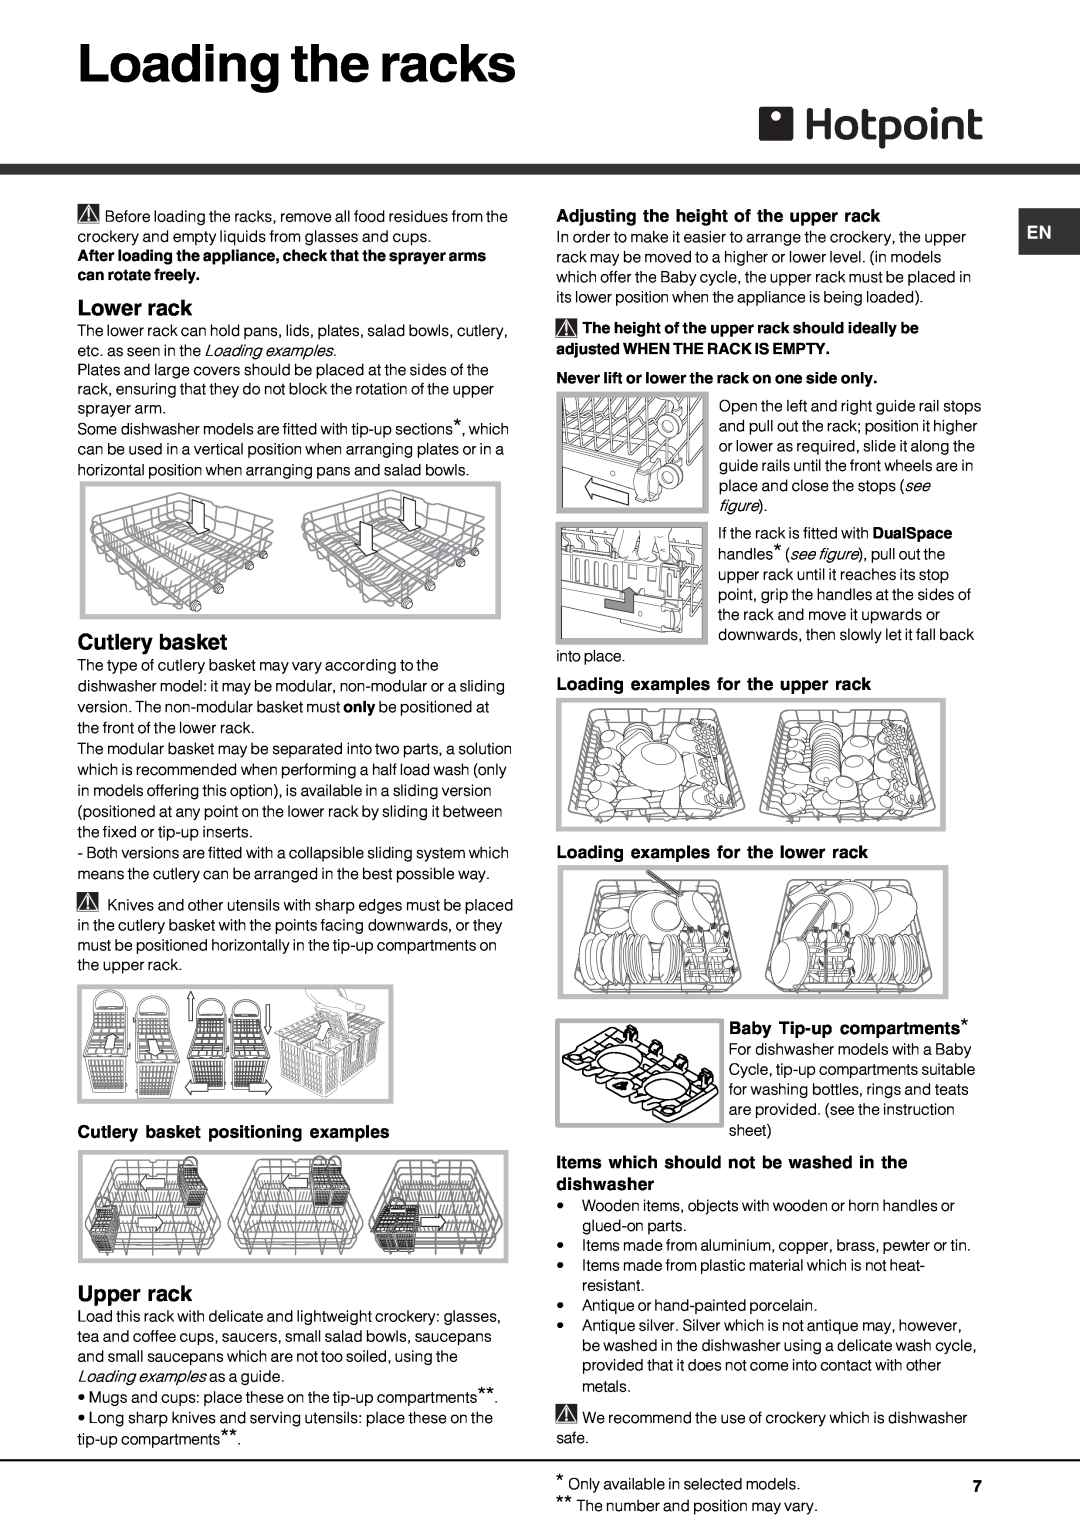 Hotpoint FDF-780 manual Loading the racks, Lower rack, Cutlery basket, Upper rack 